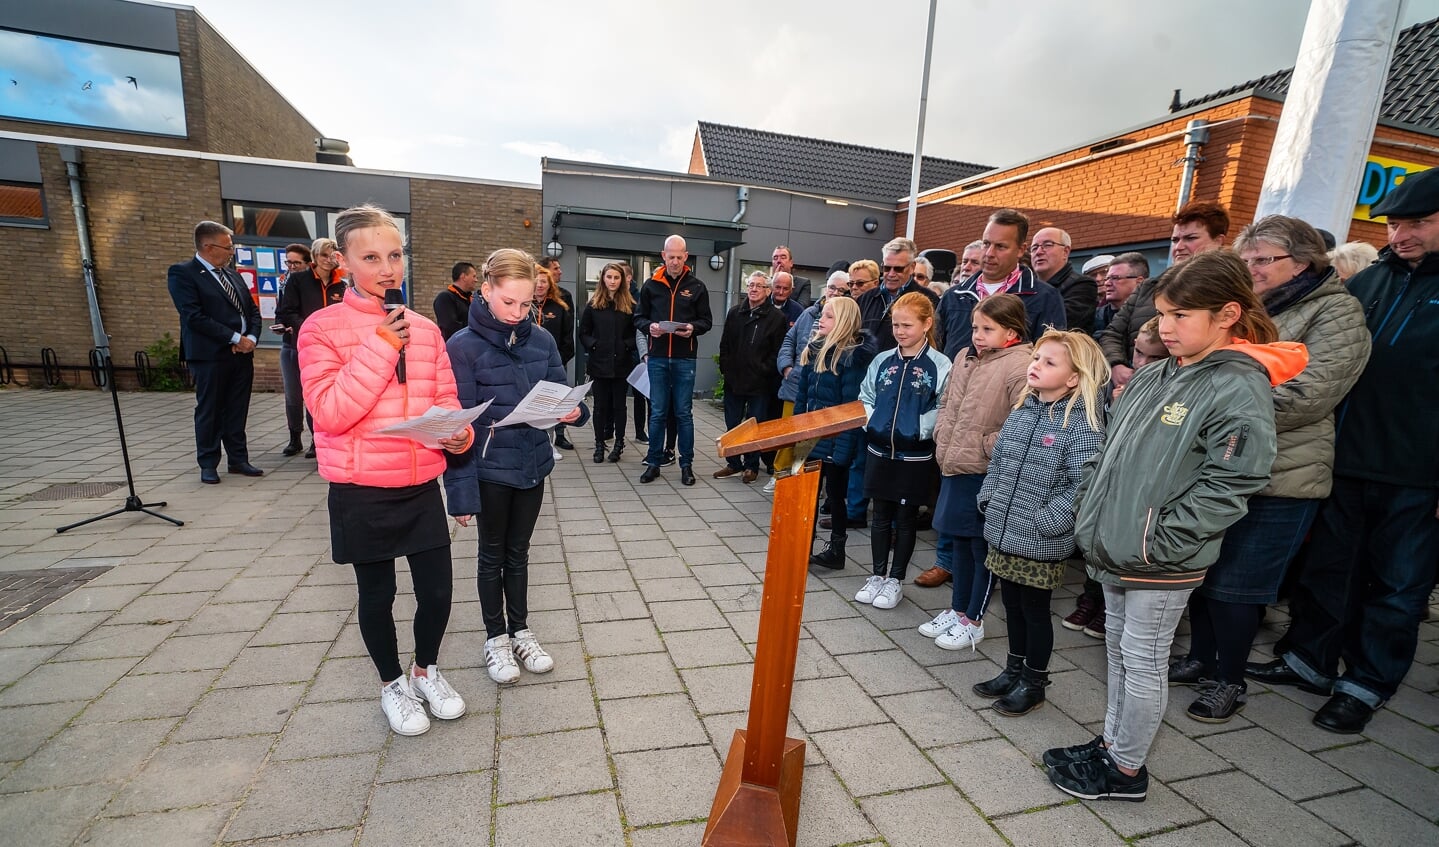 Dodenherdenking met onthulling herdenkingsmonument in Zijderveld